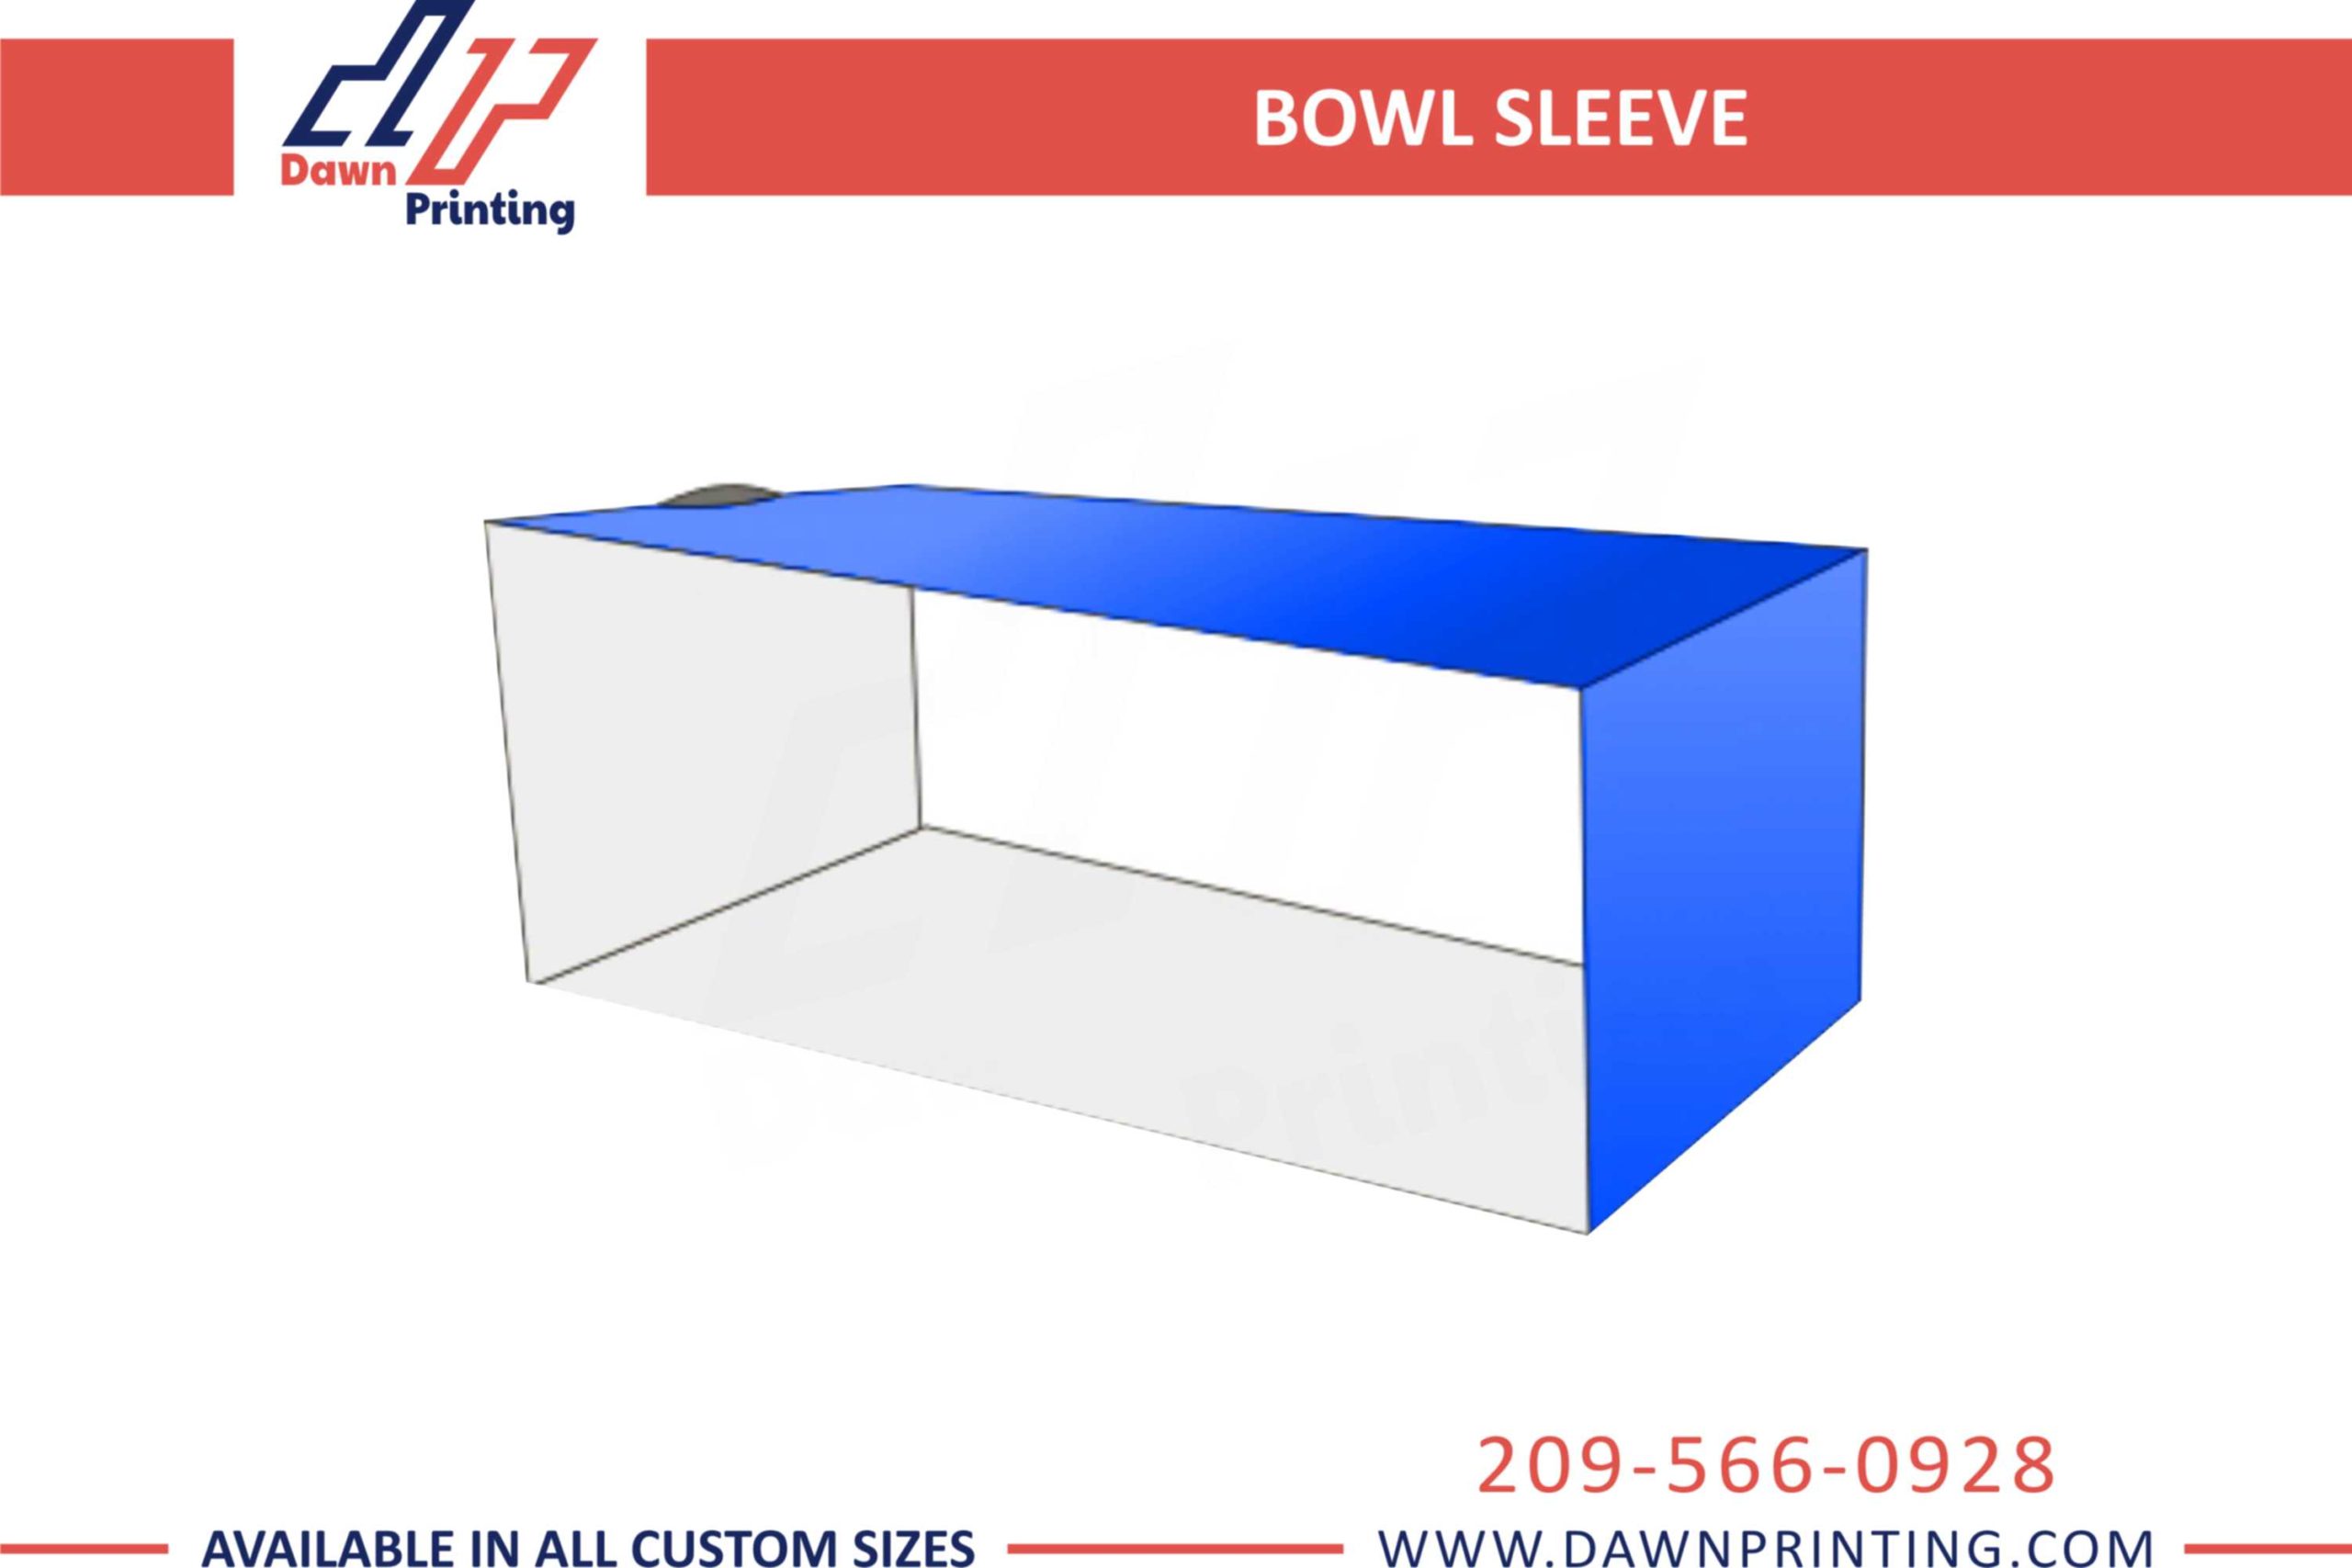 Custom Bowl Sleeve - Dawn Printing